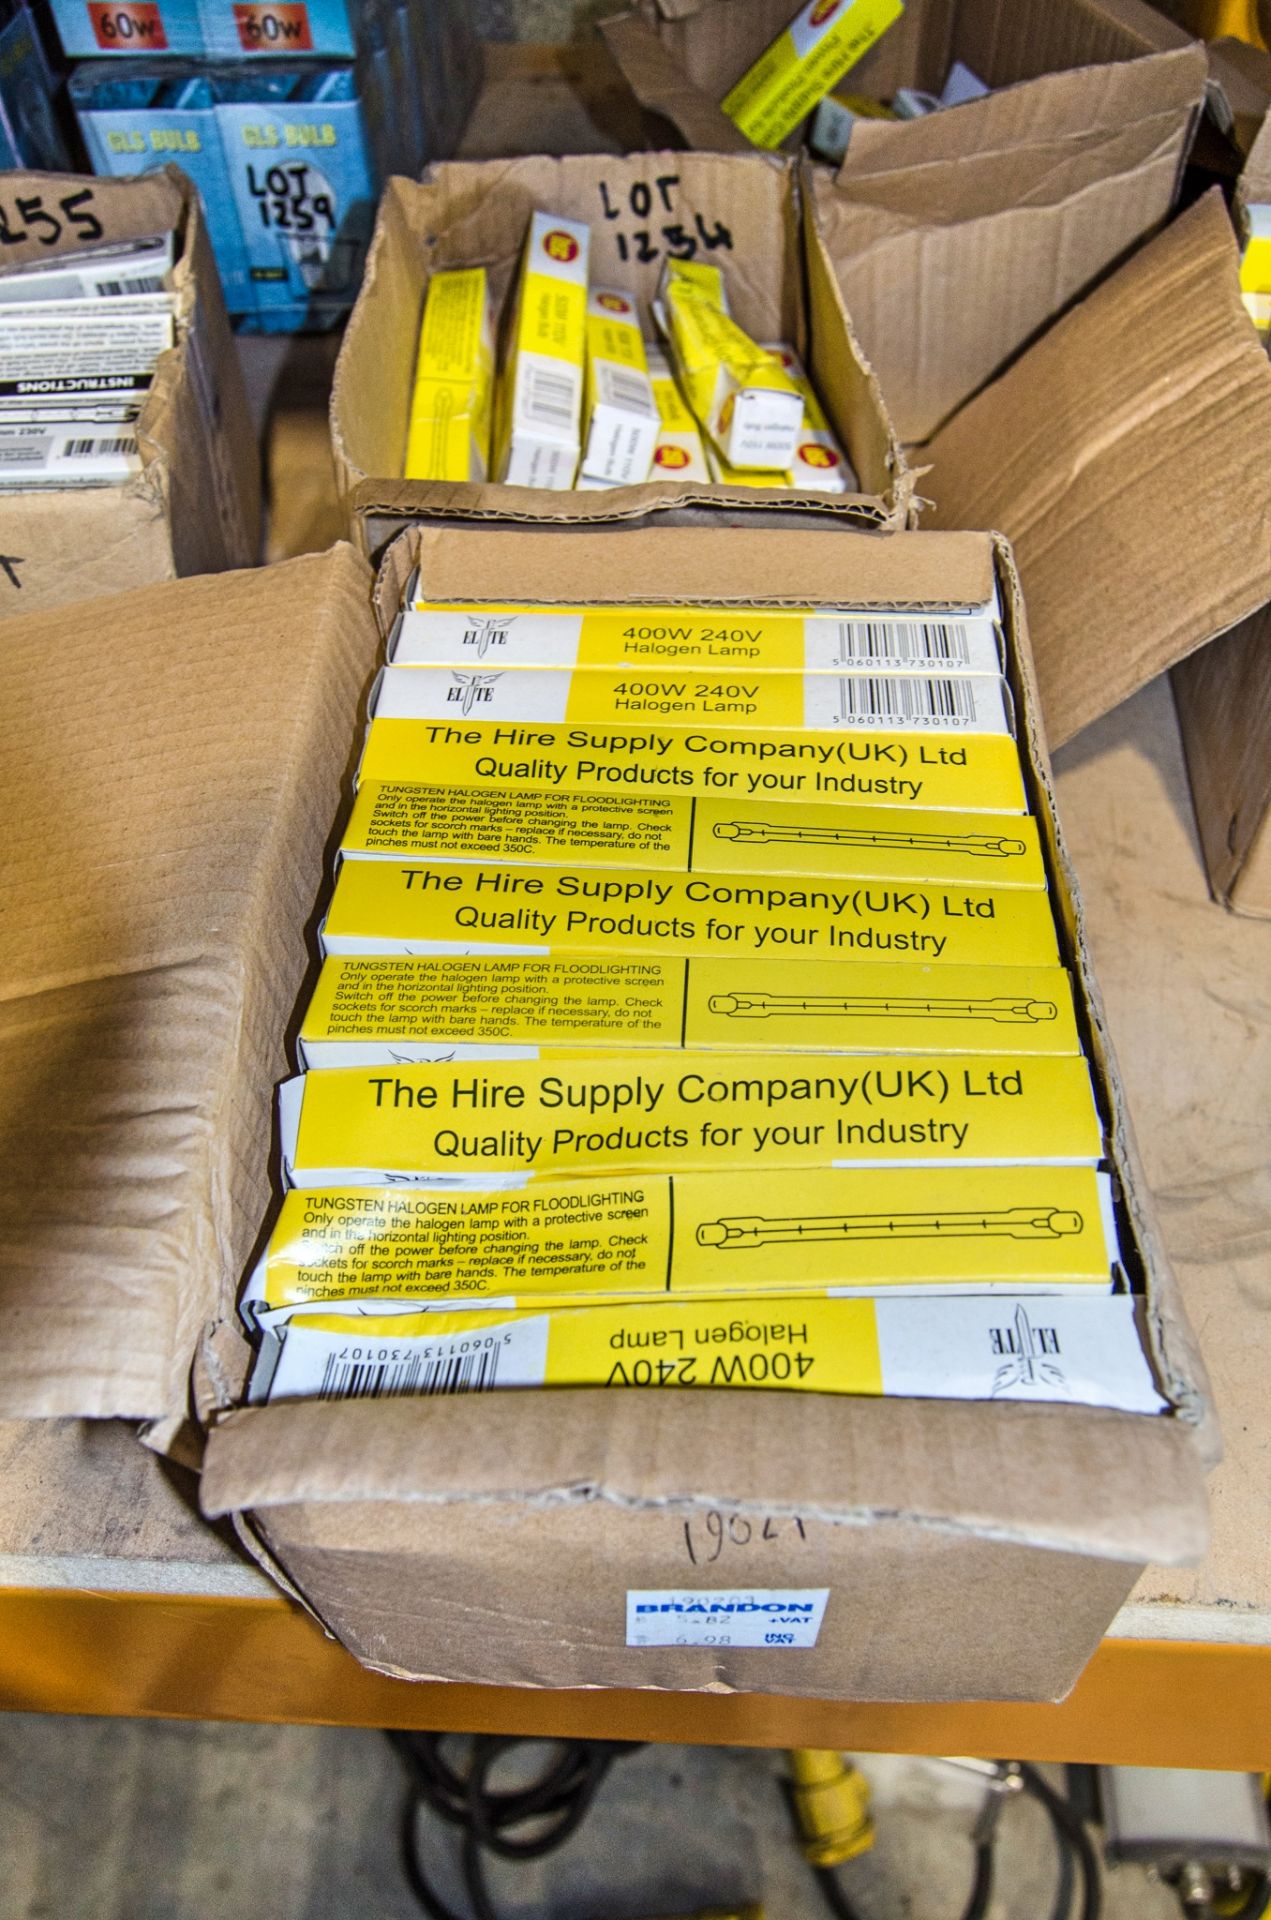 Box of 240v 400w halogen bulbs